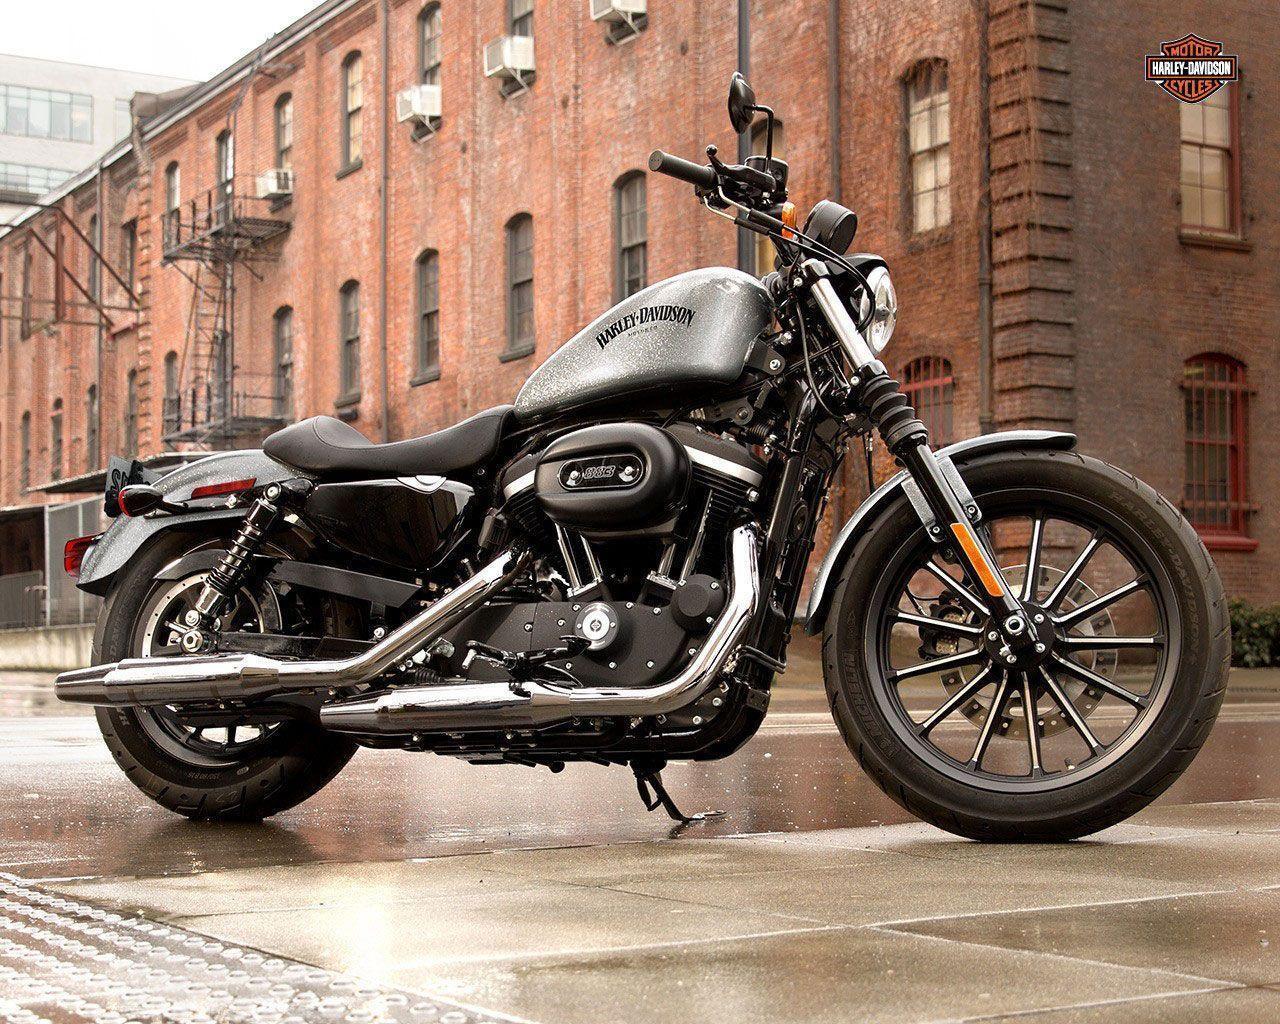 2015 Harley-davidson Xl883n Iron 883 Review - Harley Davidson Iron 750 , HD Wallpaper & Backgrounds